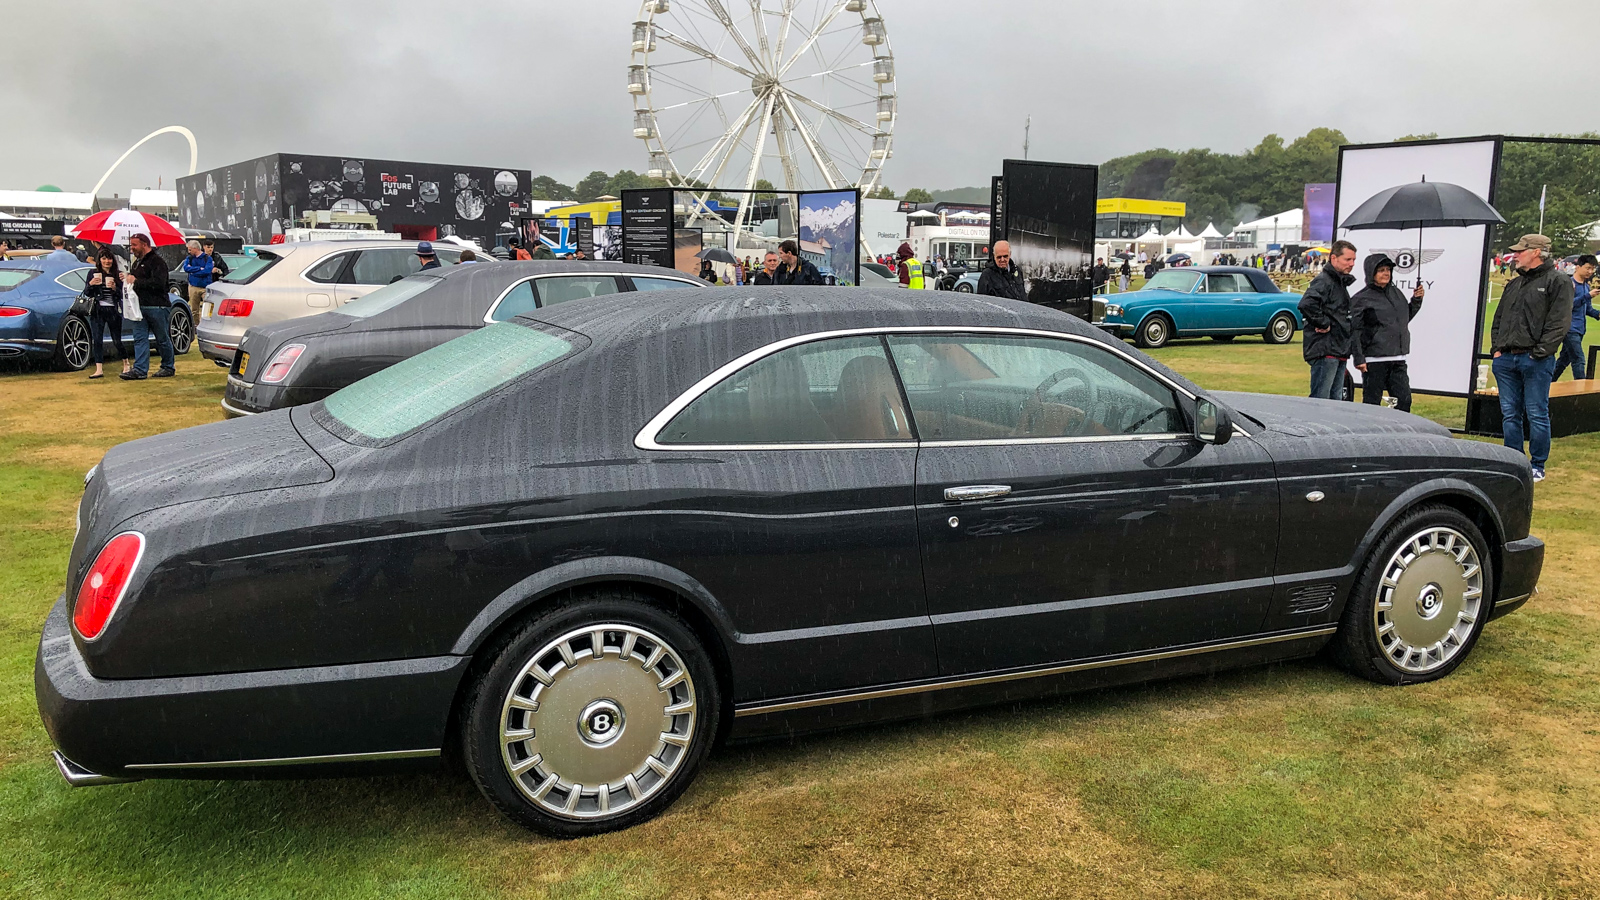 Goodwood Festival of Speed: Bentley Centenary Concours